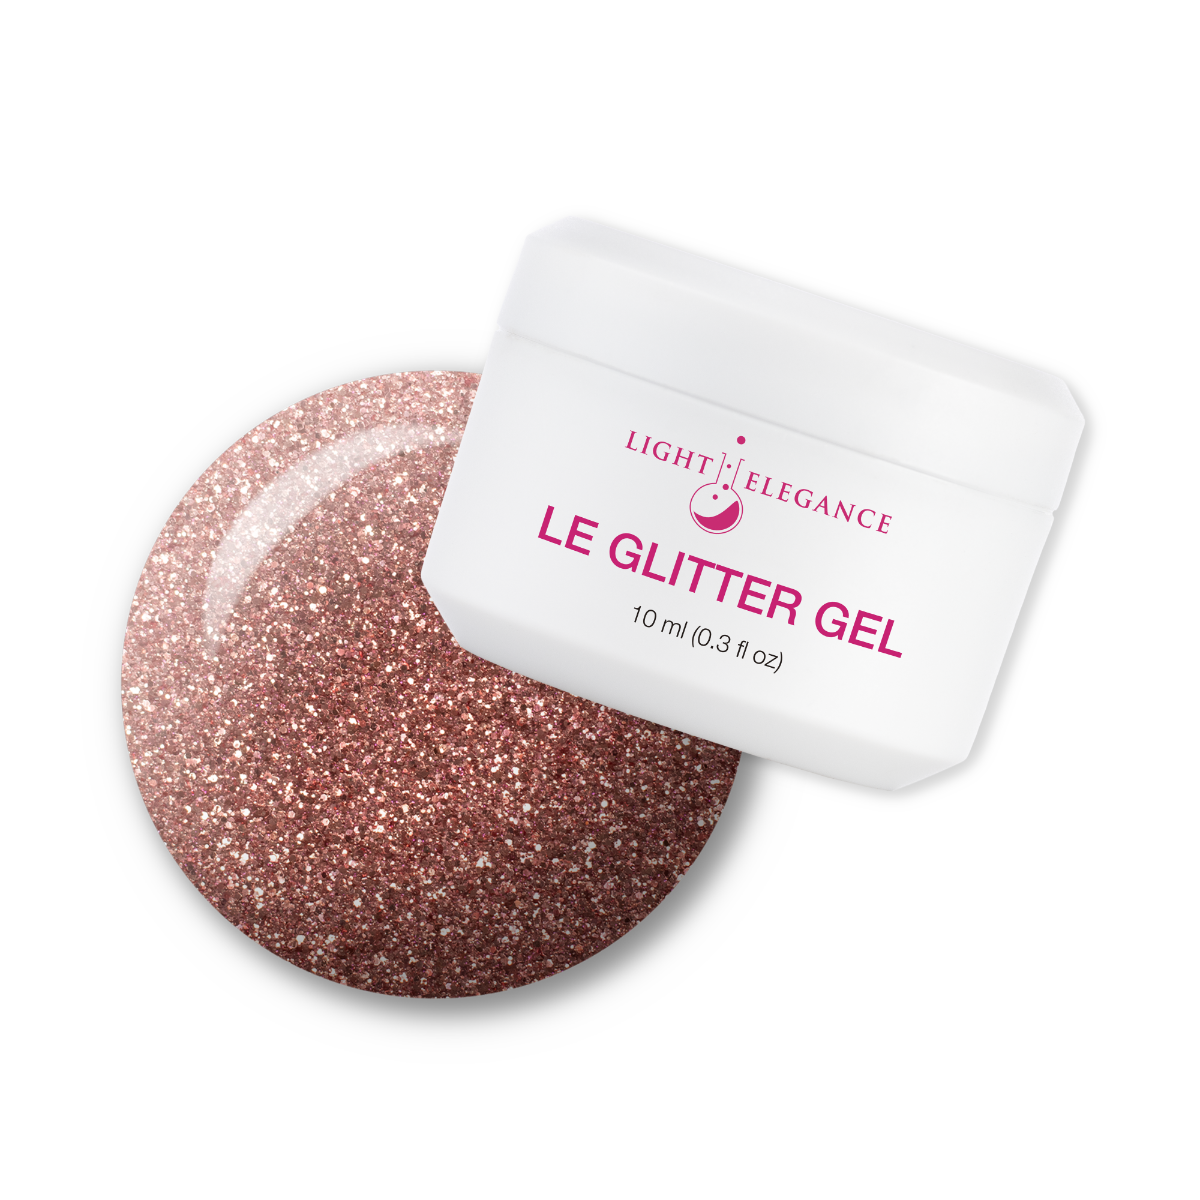 Light Elegance Glitter Gel - Diamond in the Rough - Creata Beauty - Professional Beauty Products